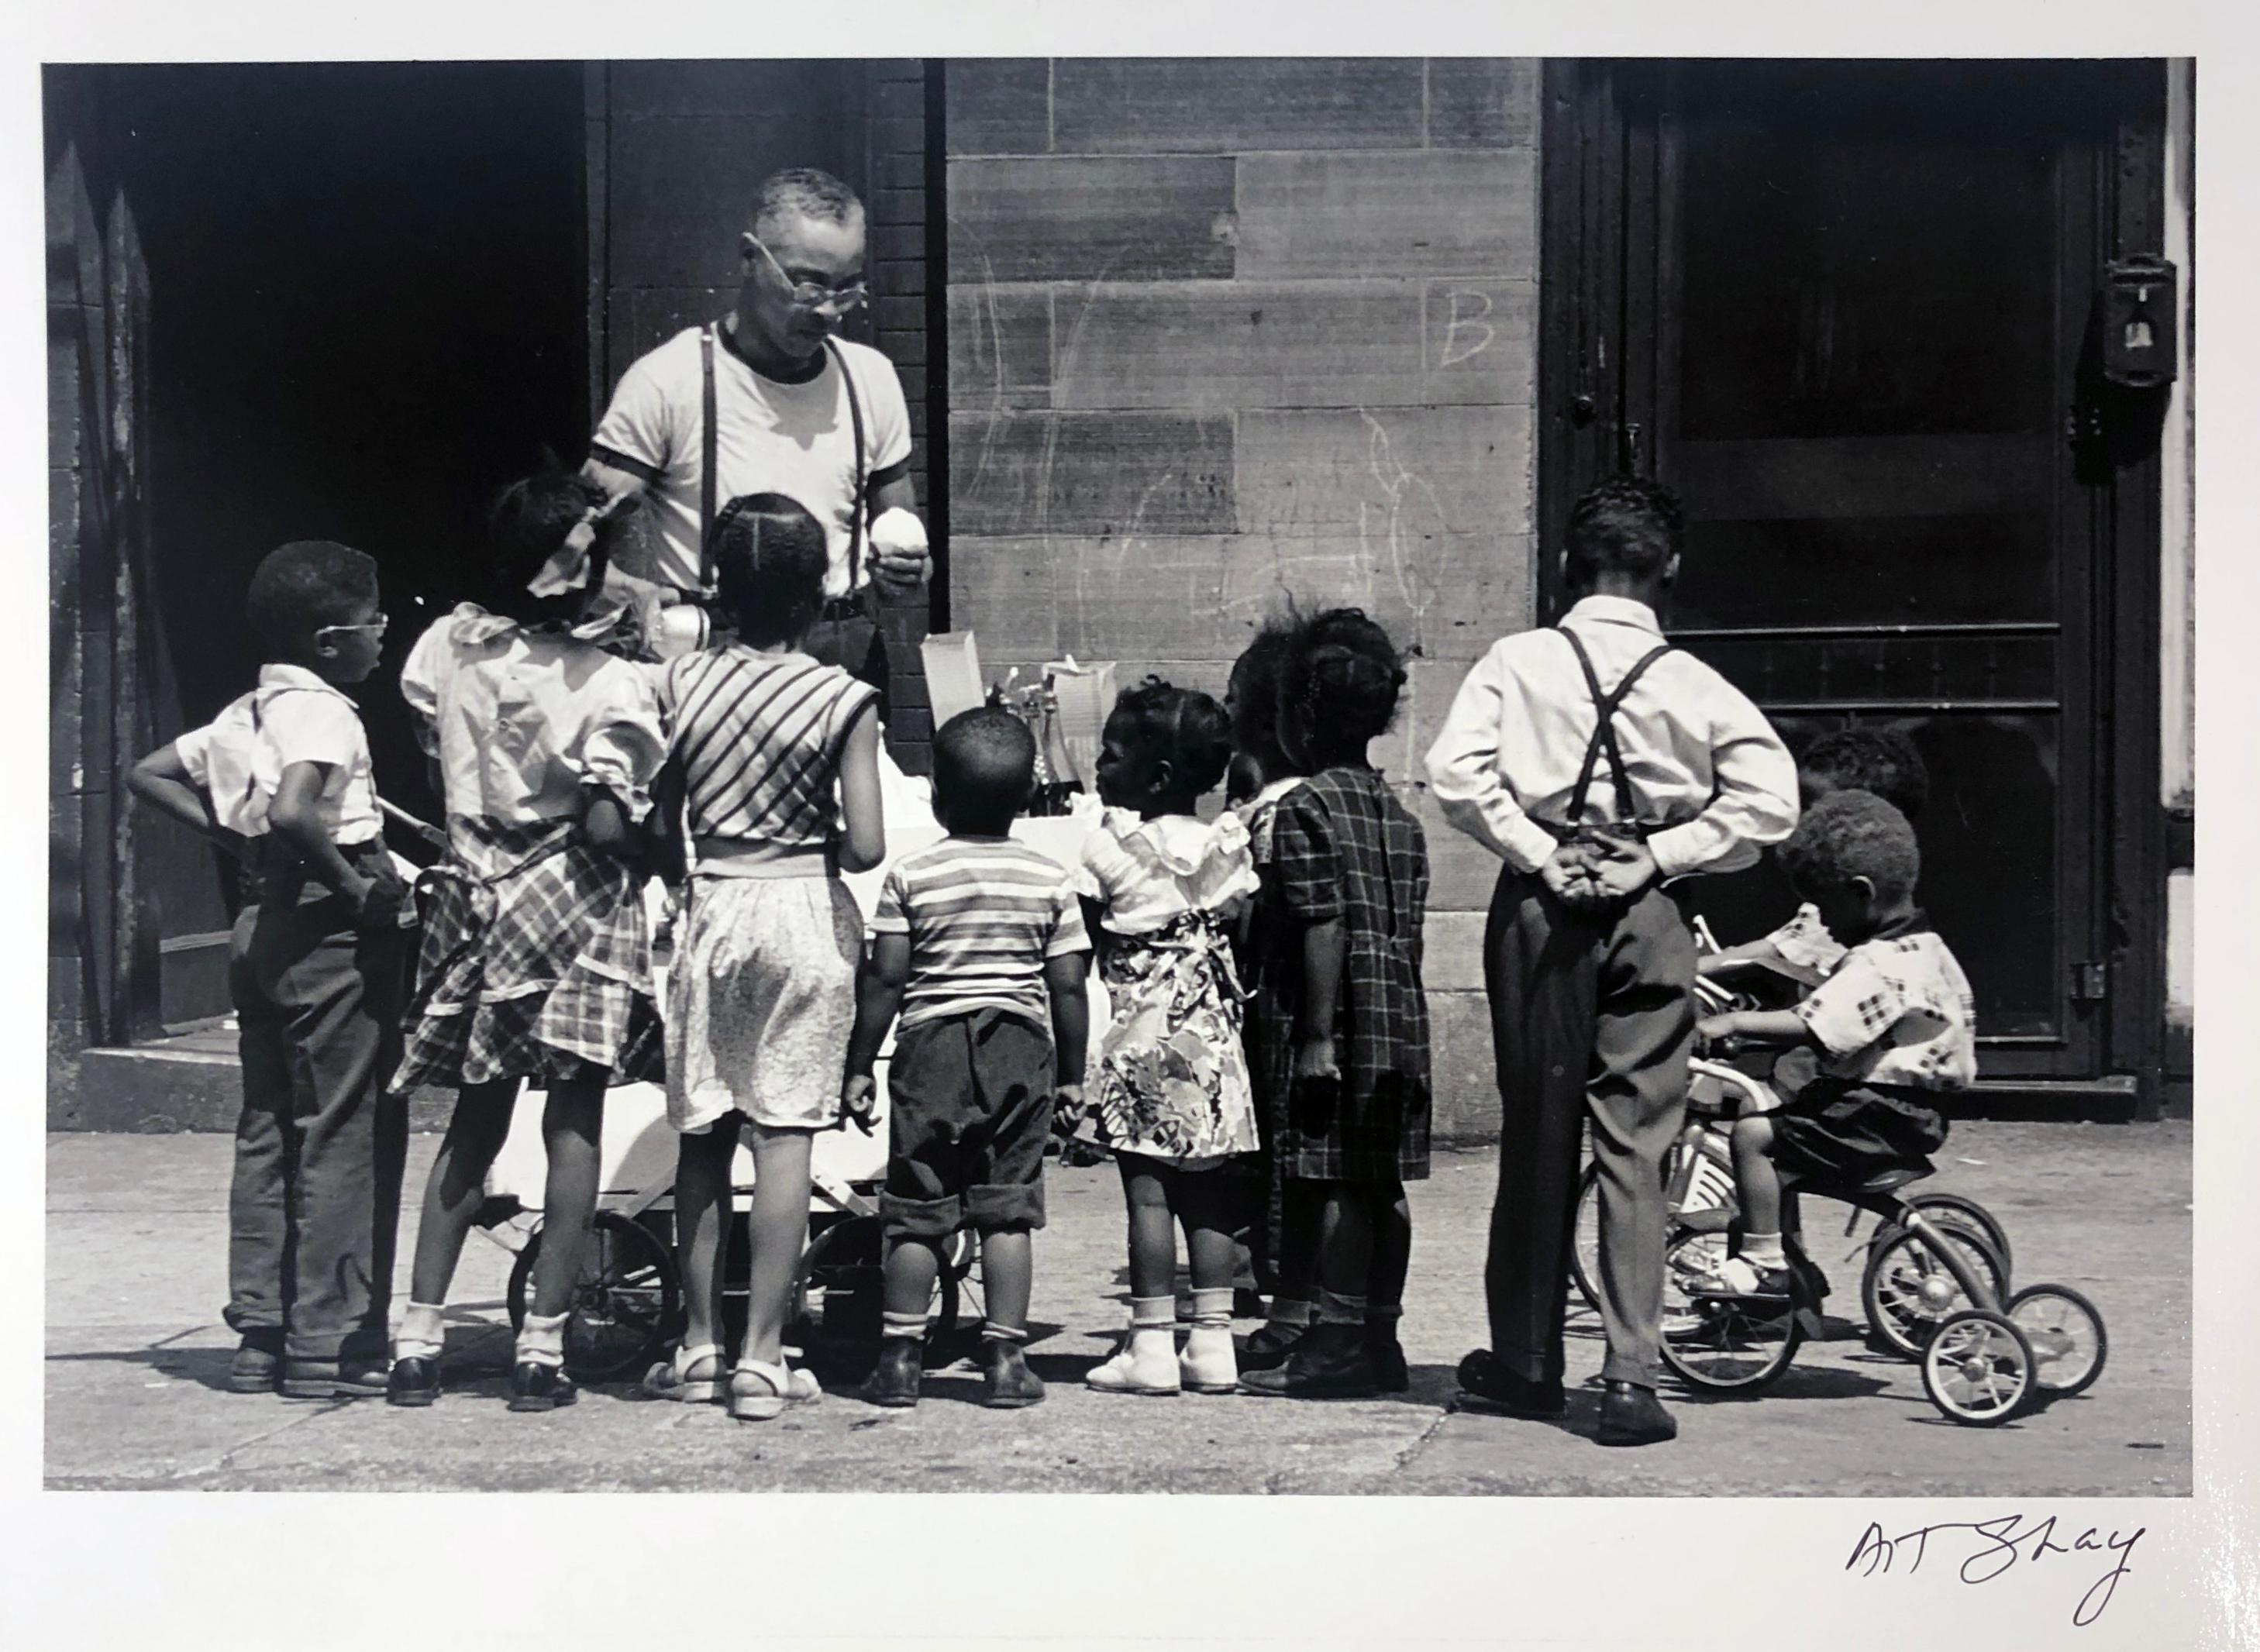 Art Shay Color Photograph - Iceman - Children Gathered Around an Ice Cream Vendor circa 1949, Photo Signed